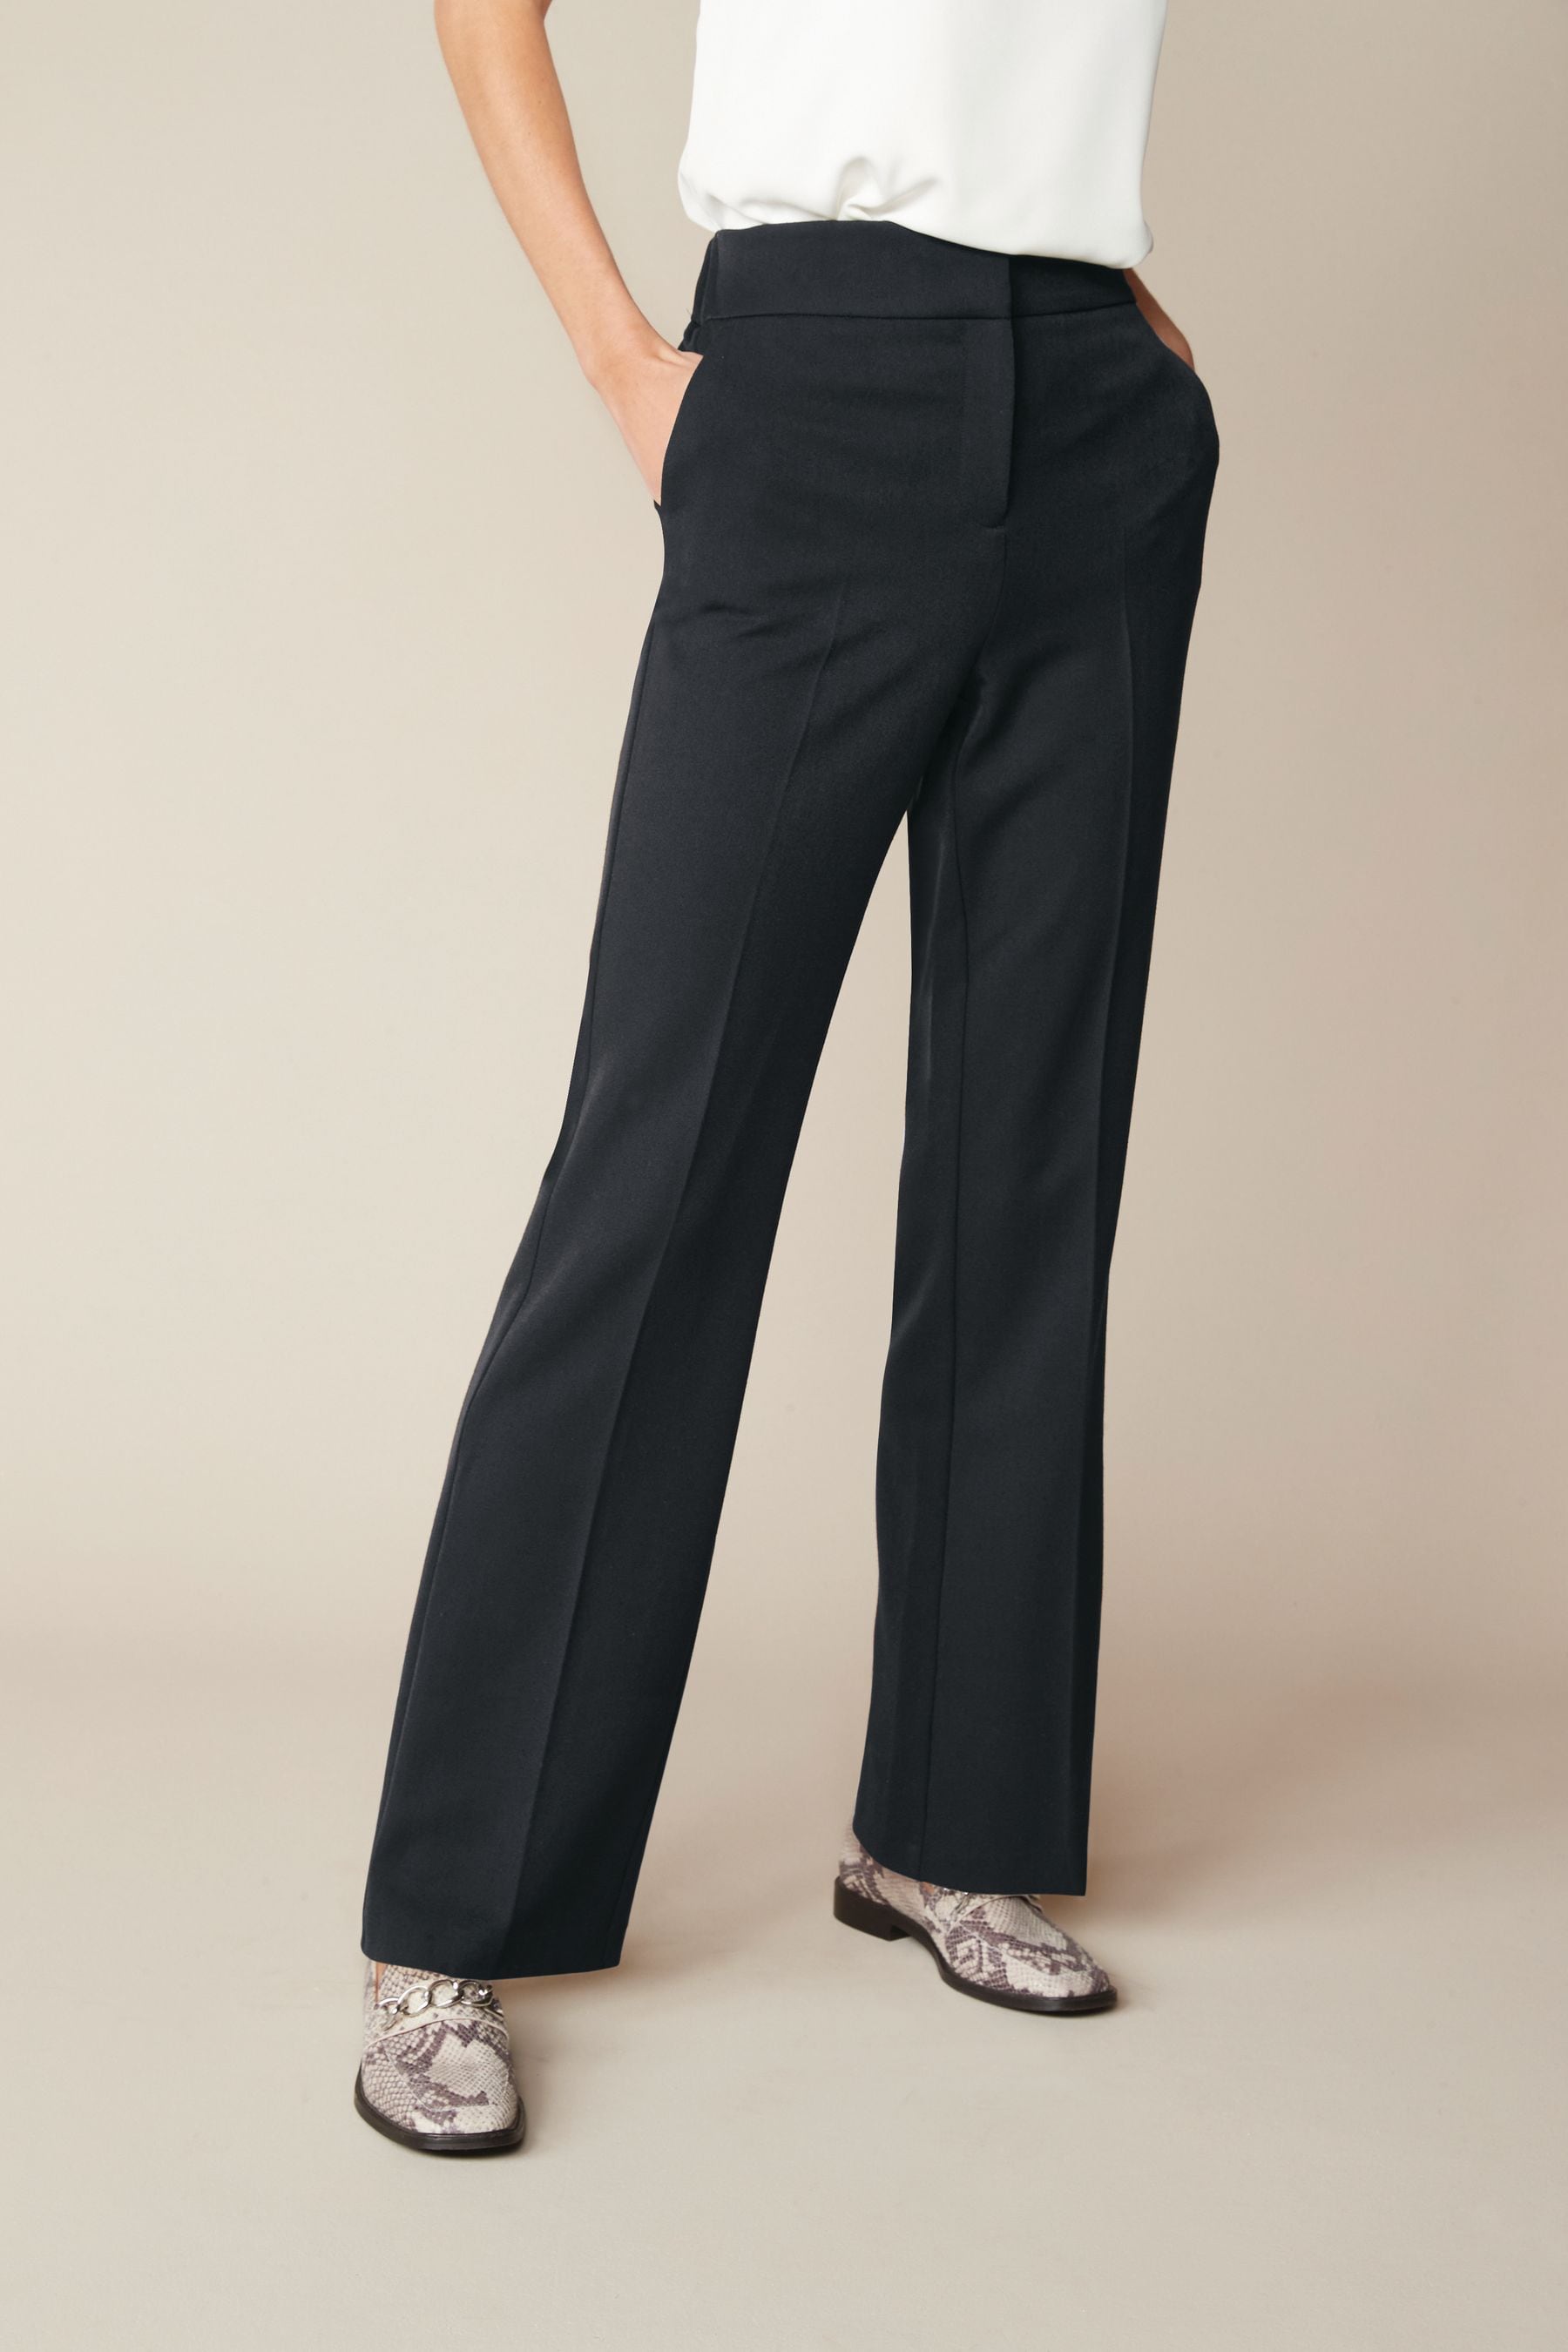 Bootcut Pants For Women  Buy Ladies Bootcut Pants Online in India